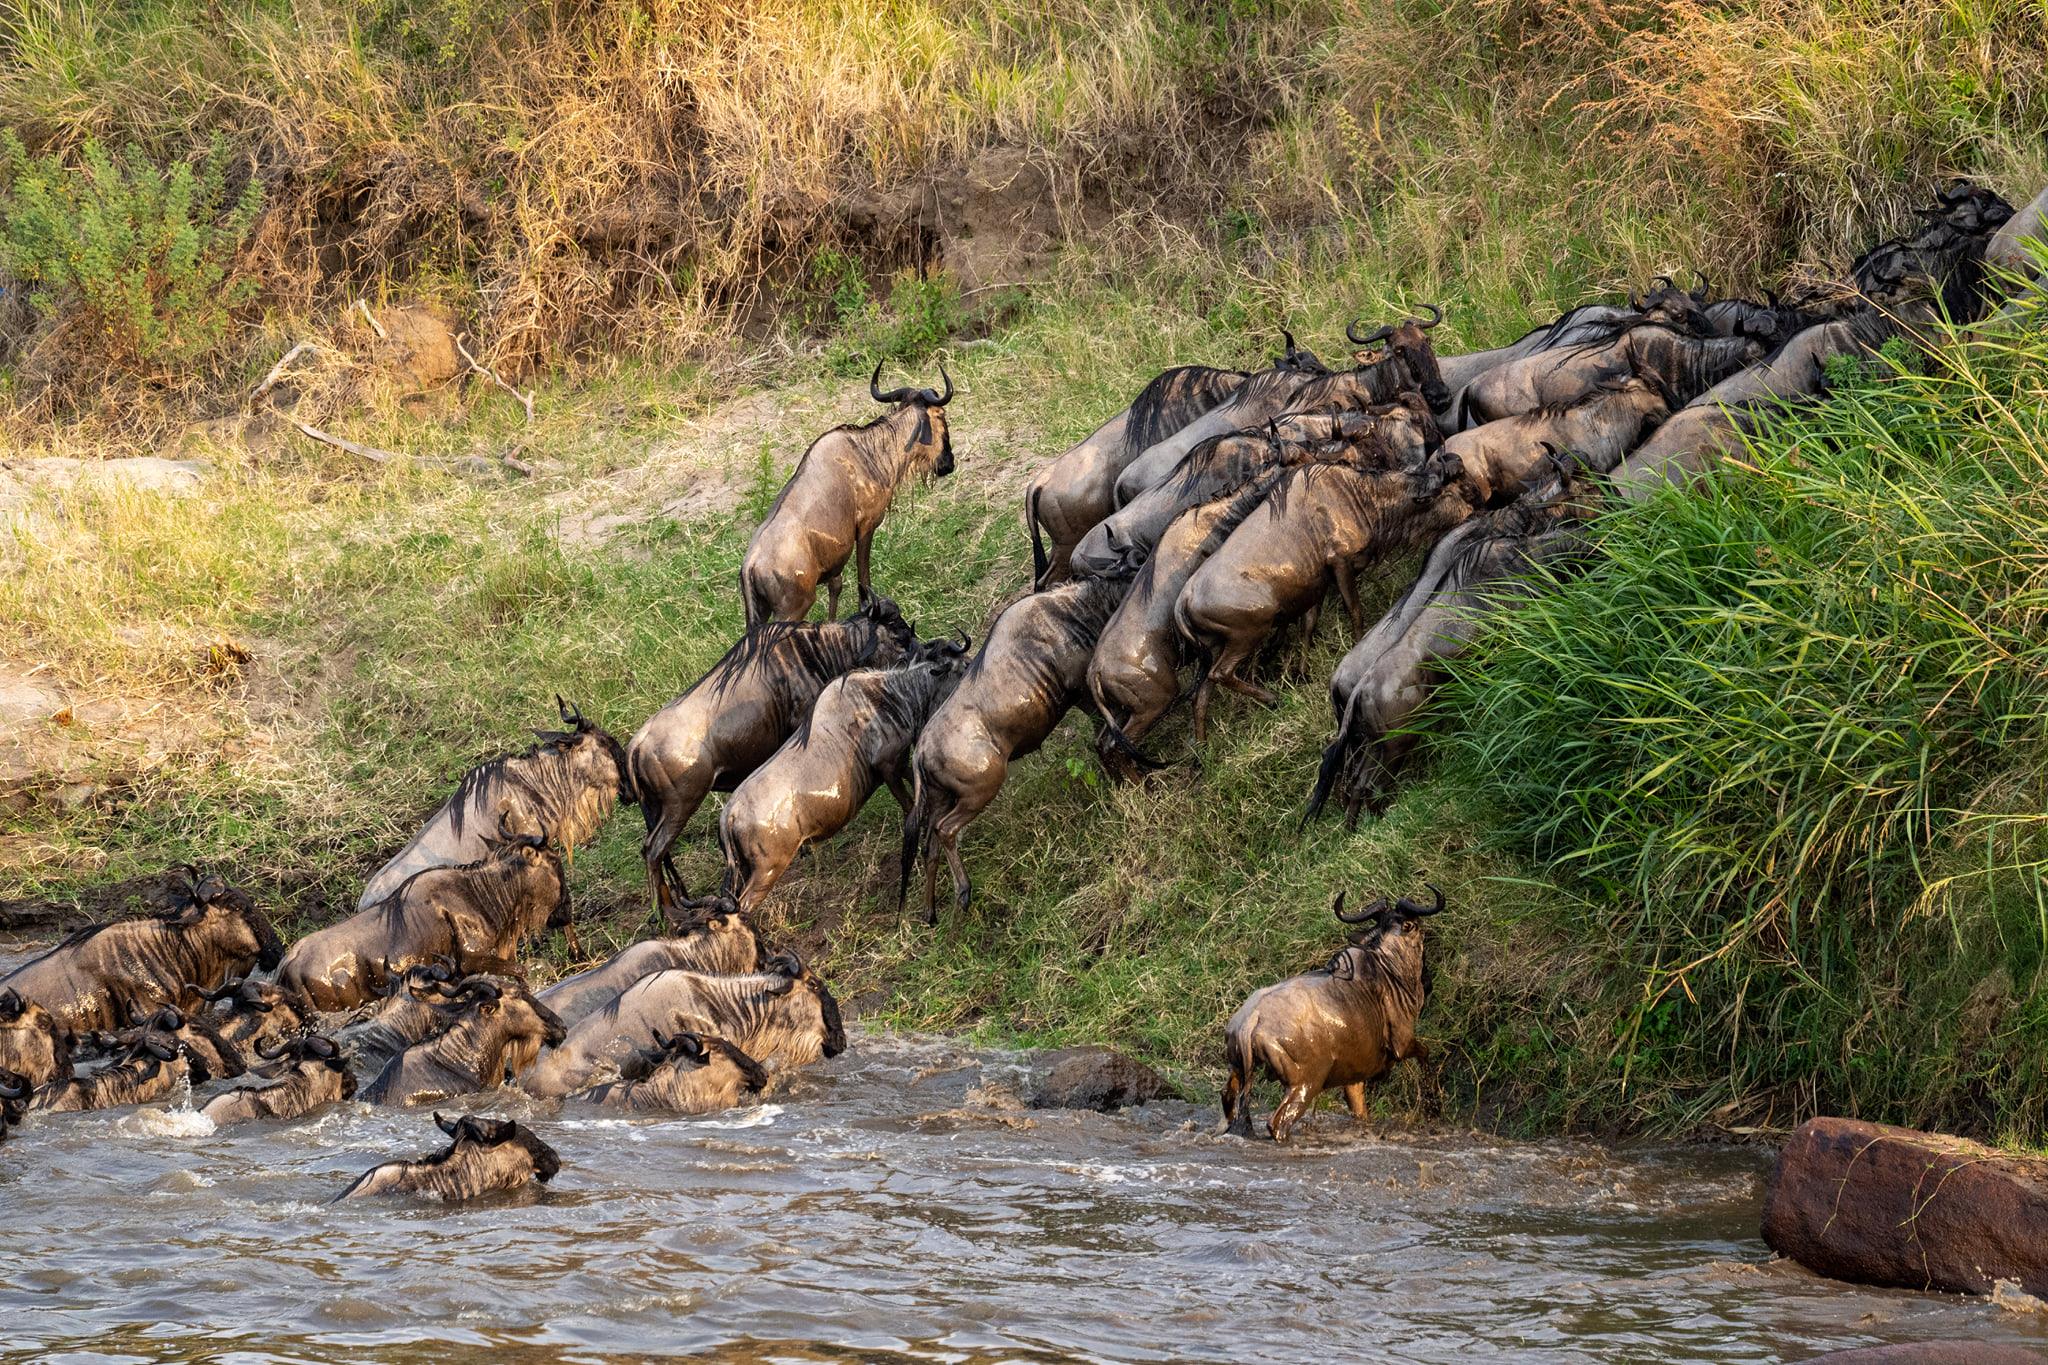 How to witness the Serengeti Wildebeest Migration